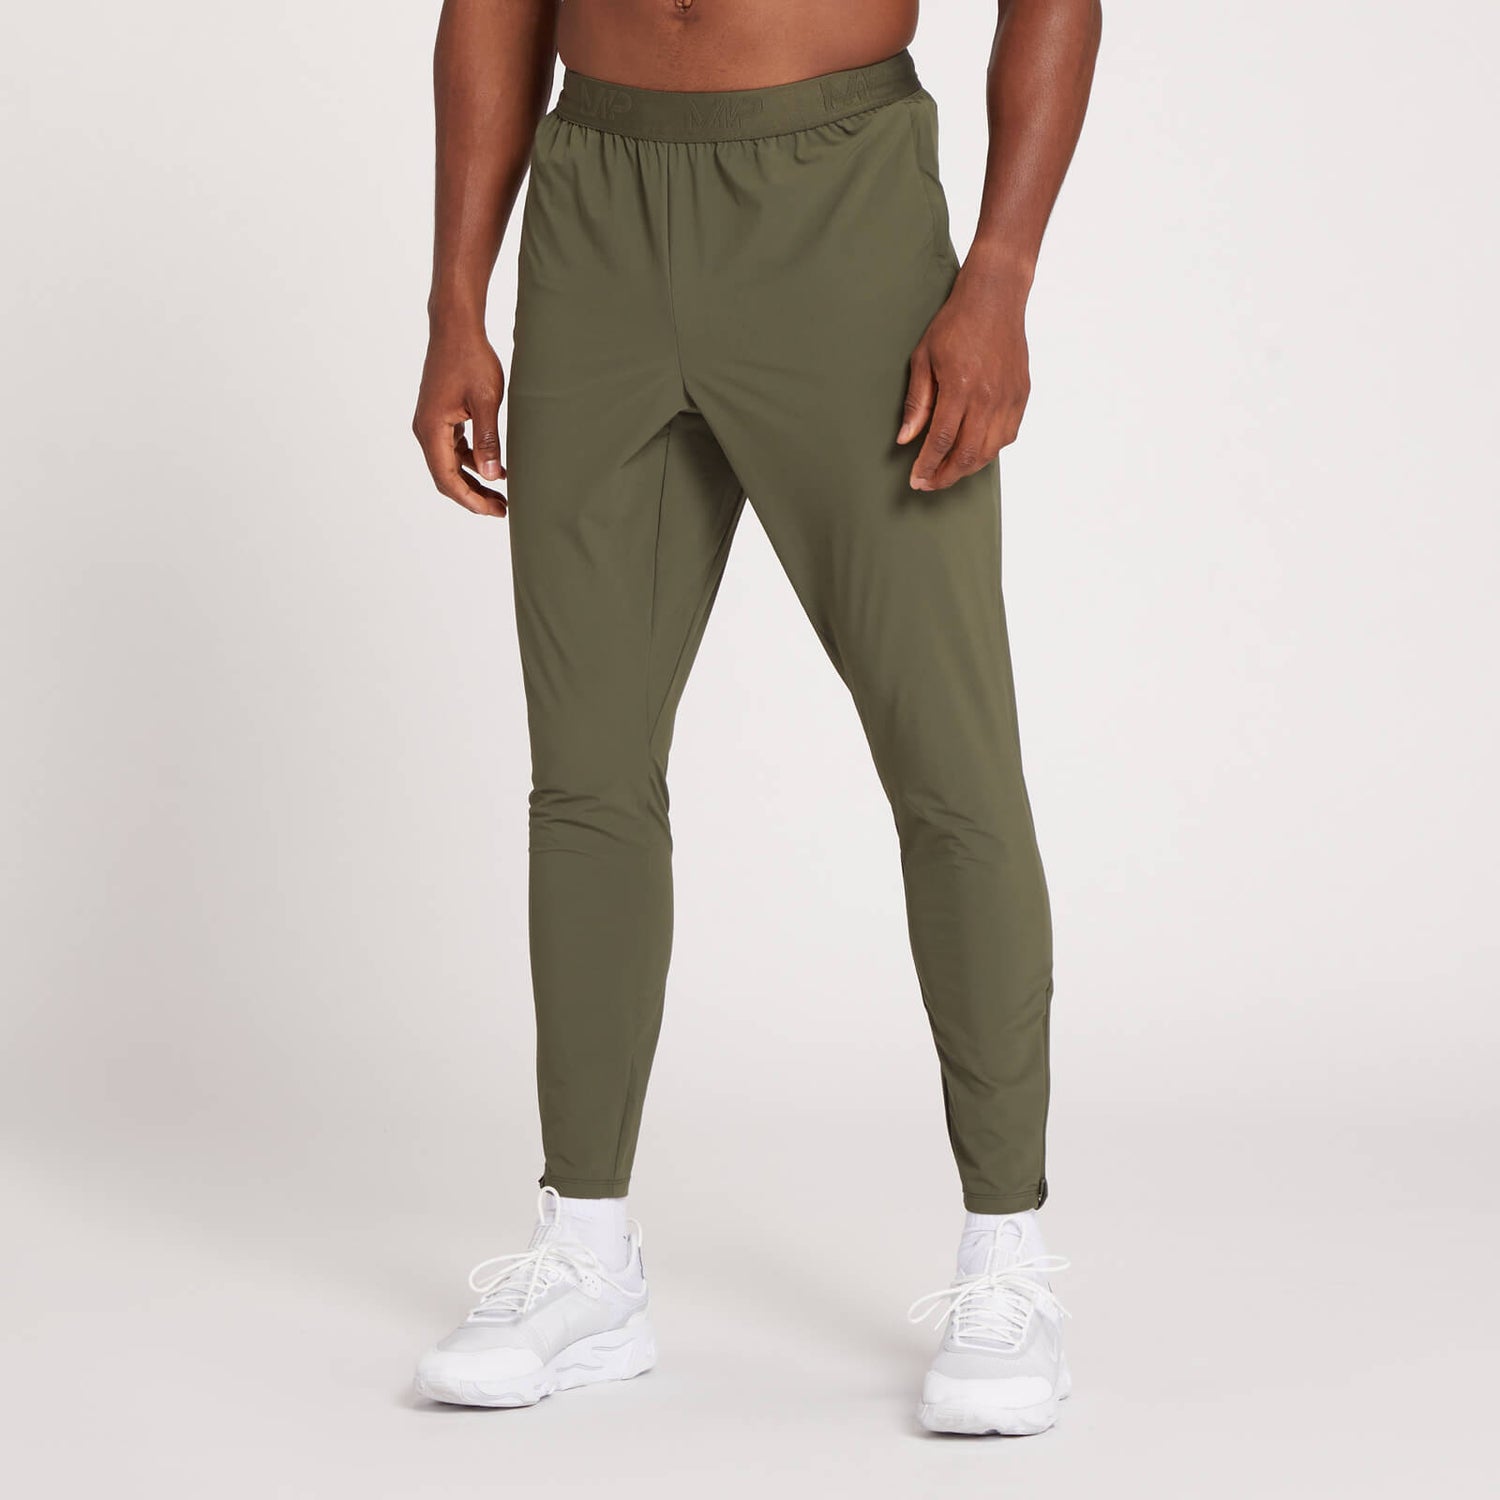 Pantaloni da jogging sportivi slim fit MP Dynamic da uomo - Verde oliva scuro - XXS